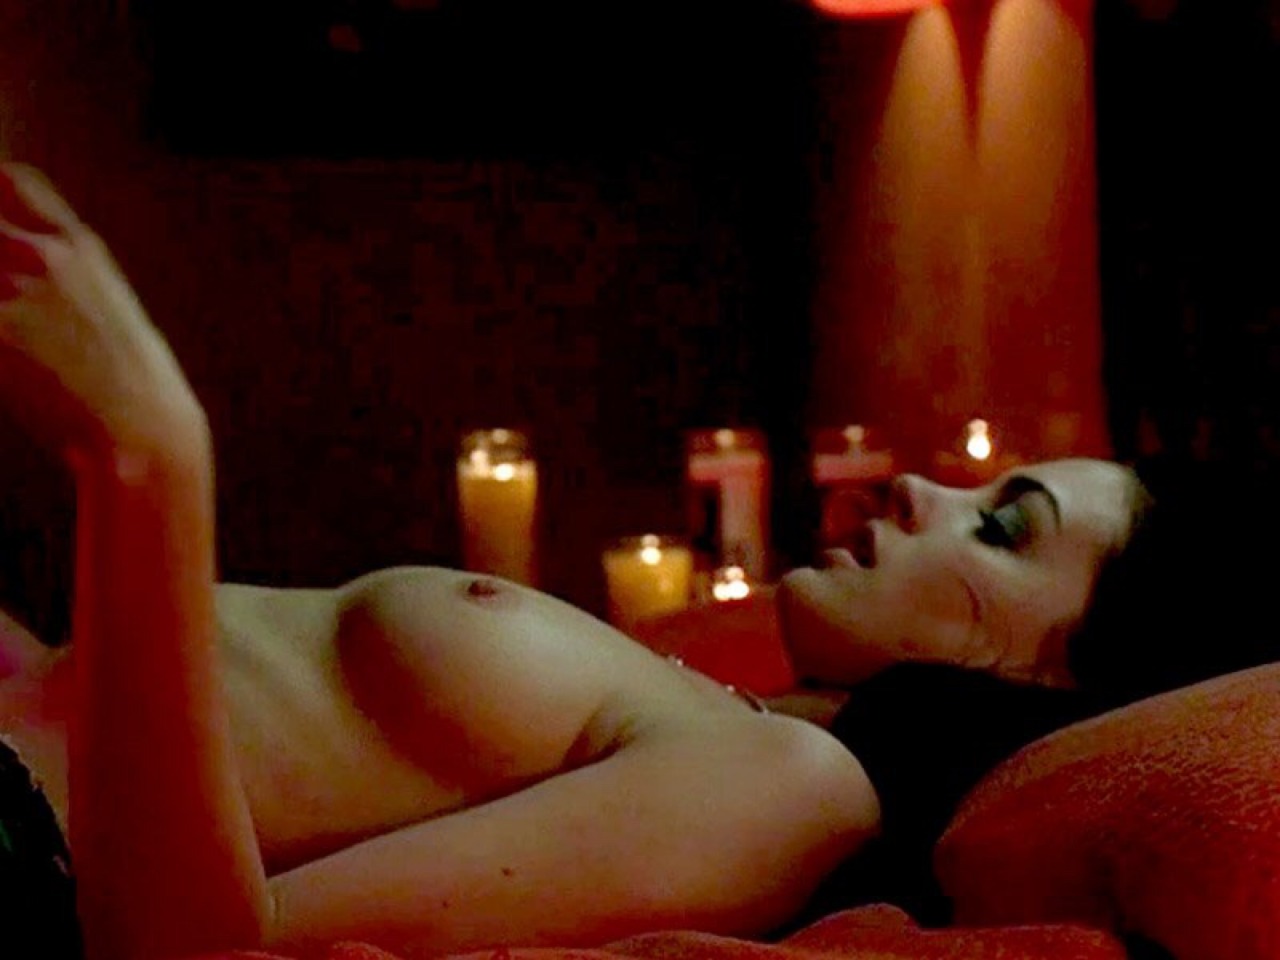 celeb-nude:  Anne Hathaway American Actress #celebrity nude #nude celeb